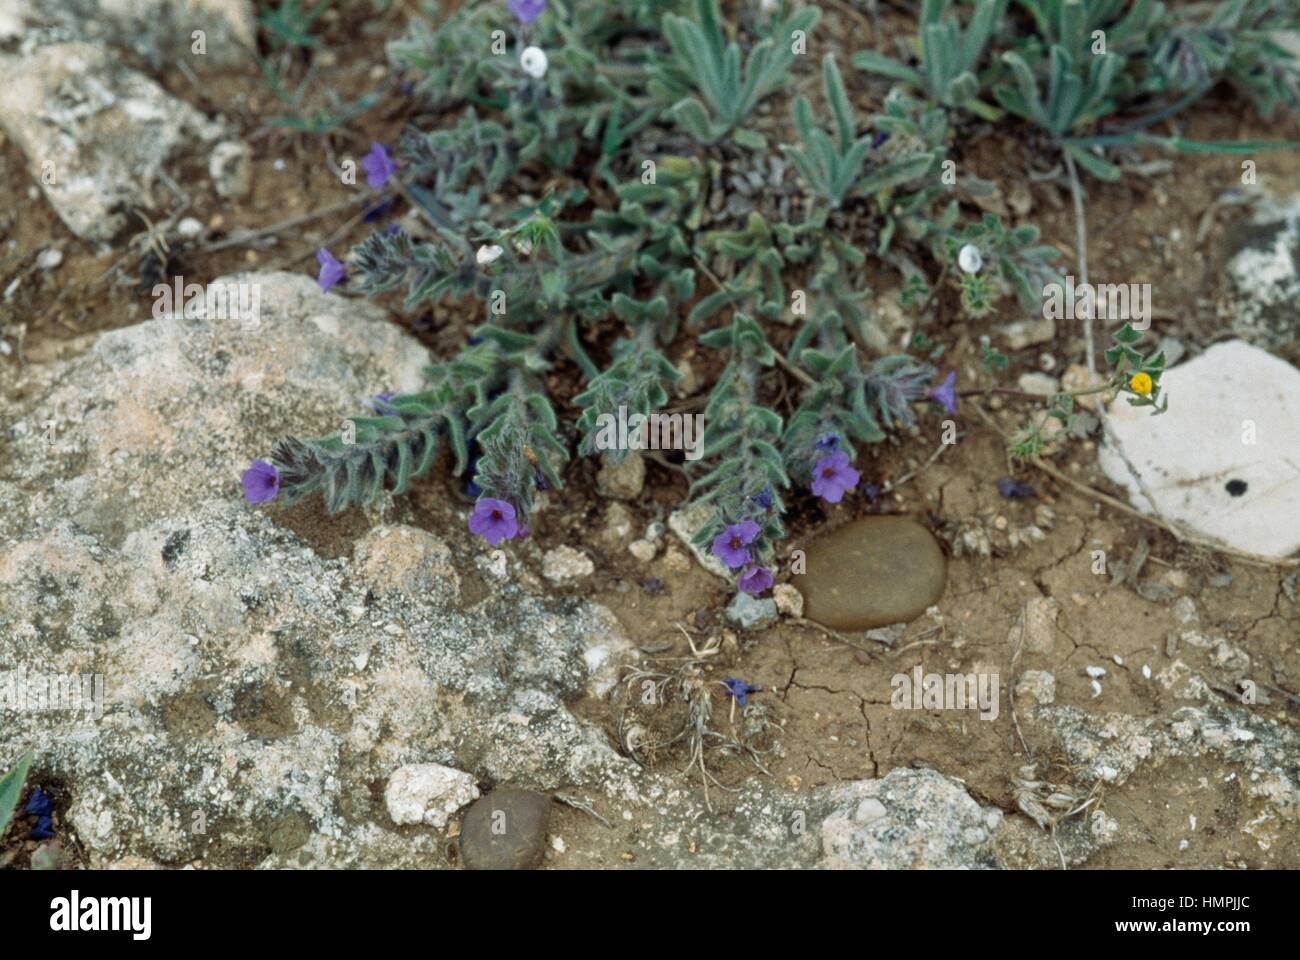 Alkanet or Dyers' Bugloss (Alkanna tinctoria), Boraginaceae. Stock Photo